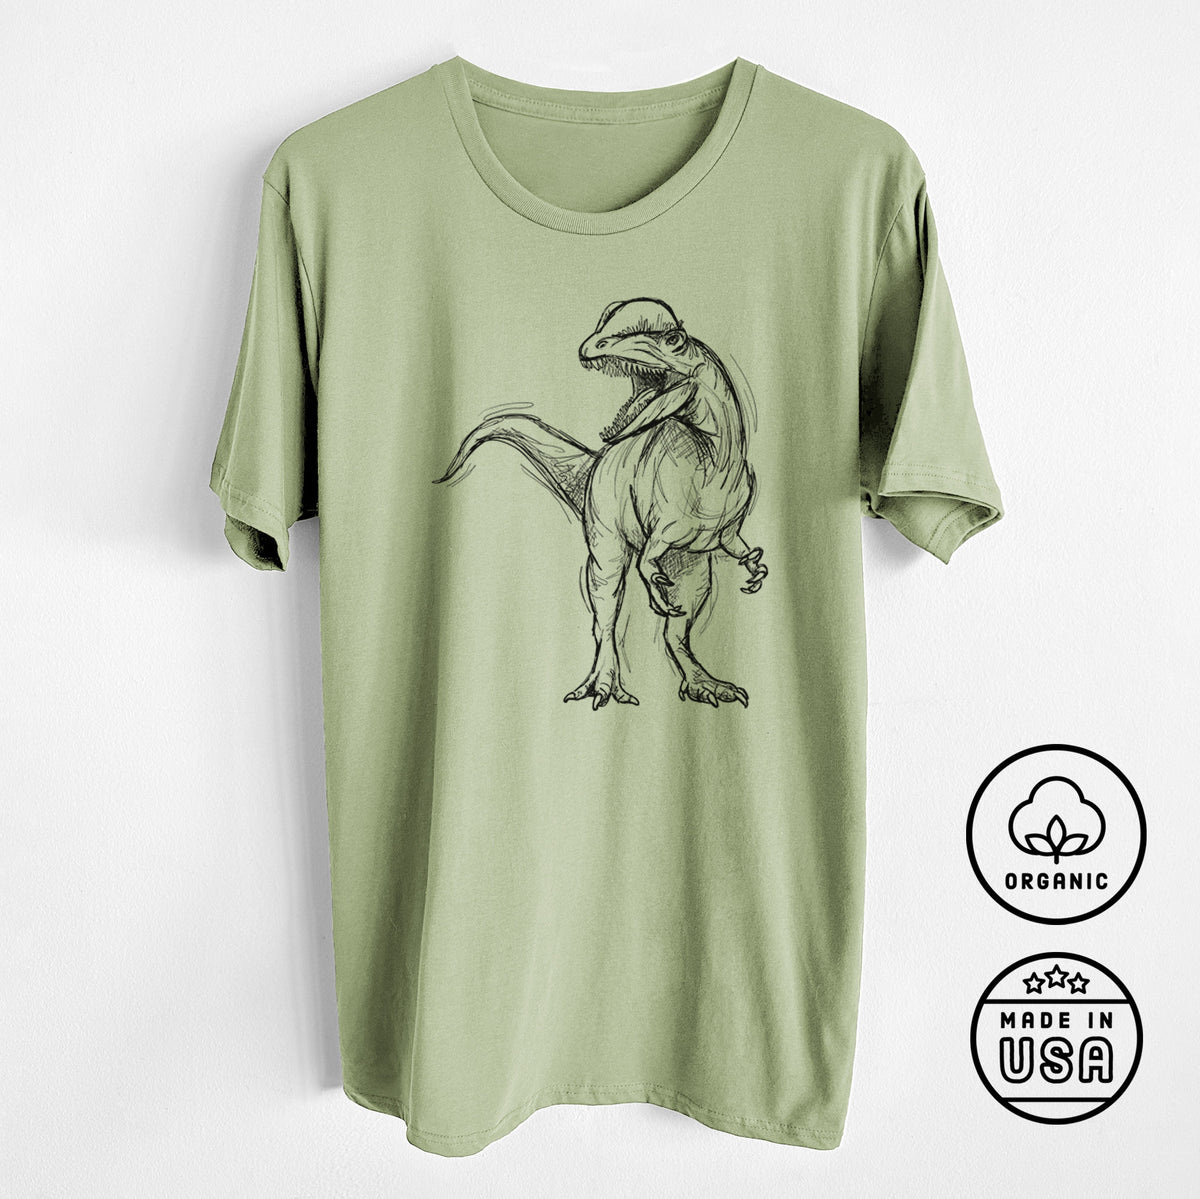 Dilophosaurus Wetherilli - Unisex Crewneck - Made in USA - 100% Organic Cotton